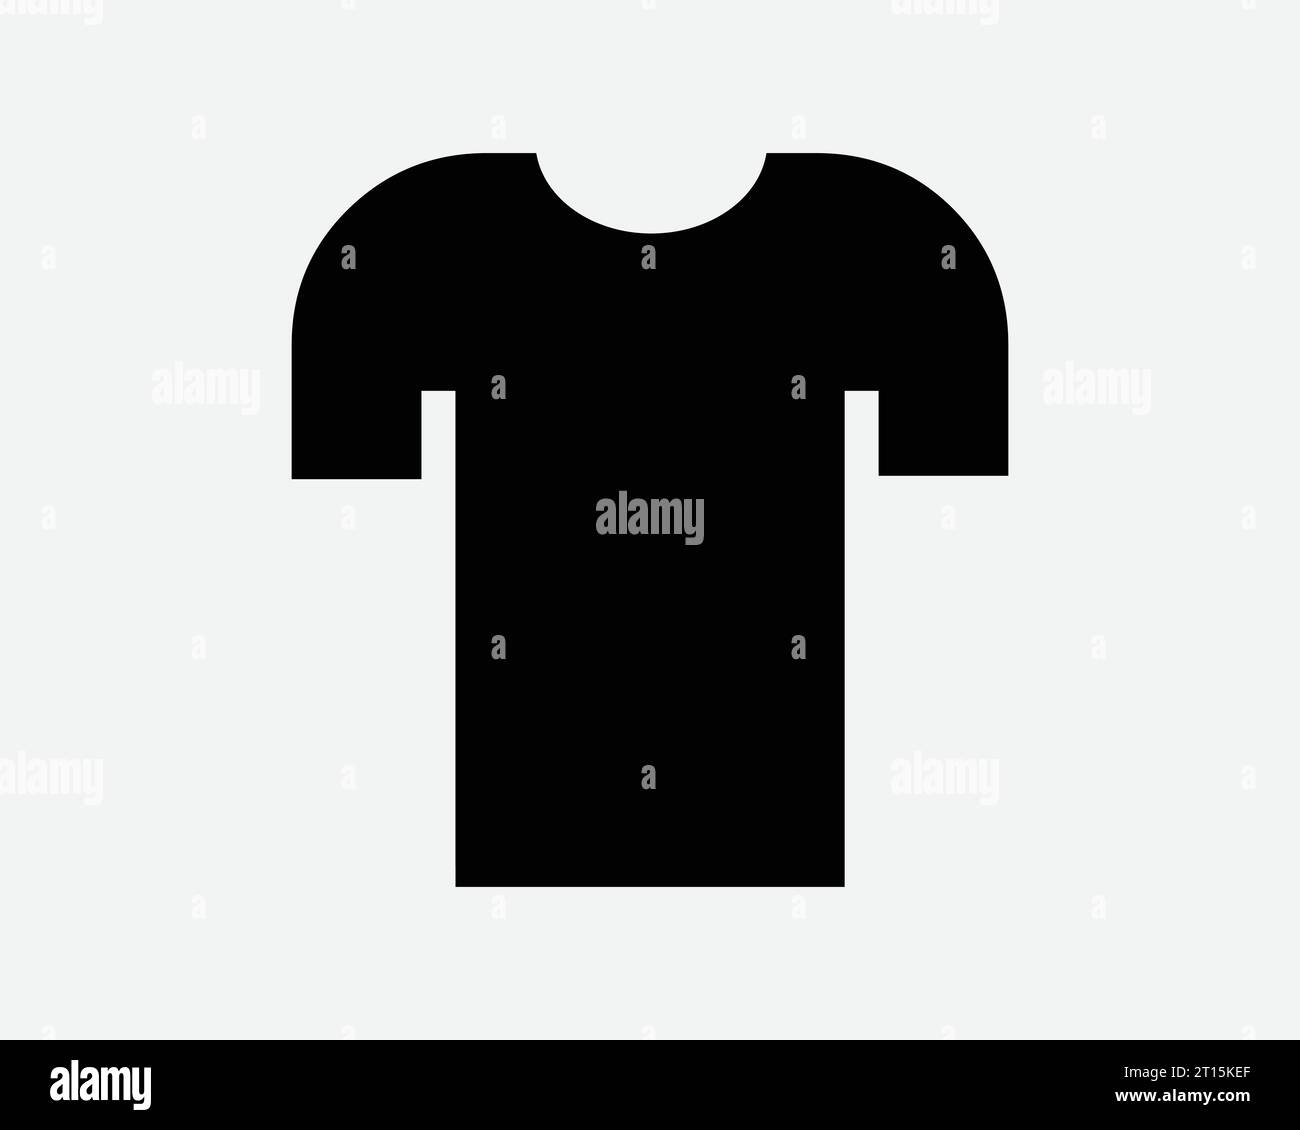 Shirt Plain Simple T Shirt Tee Design Fashion Retail Store T-shirt Short Sleeves Apparel Wear Textile Black White Shape Icon Sign Symbol EPS Vector Stock Vector